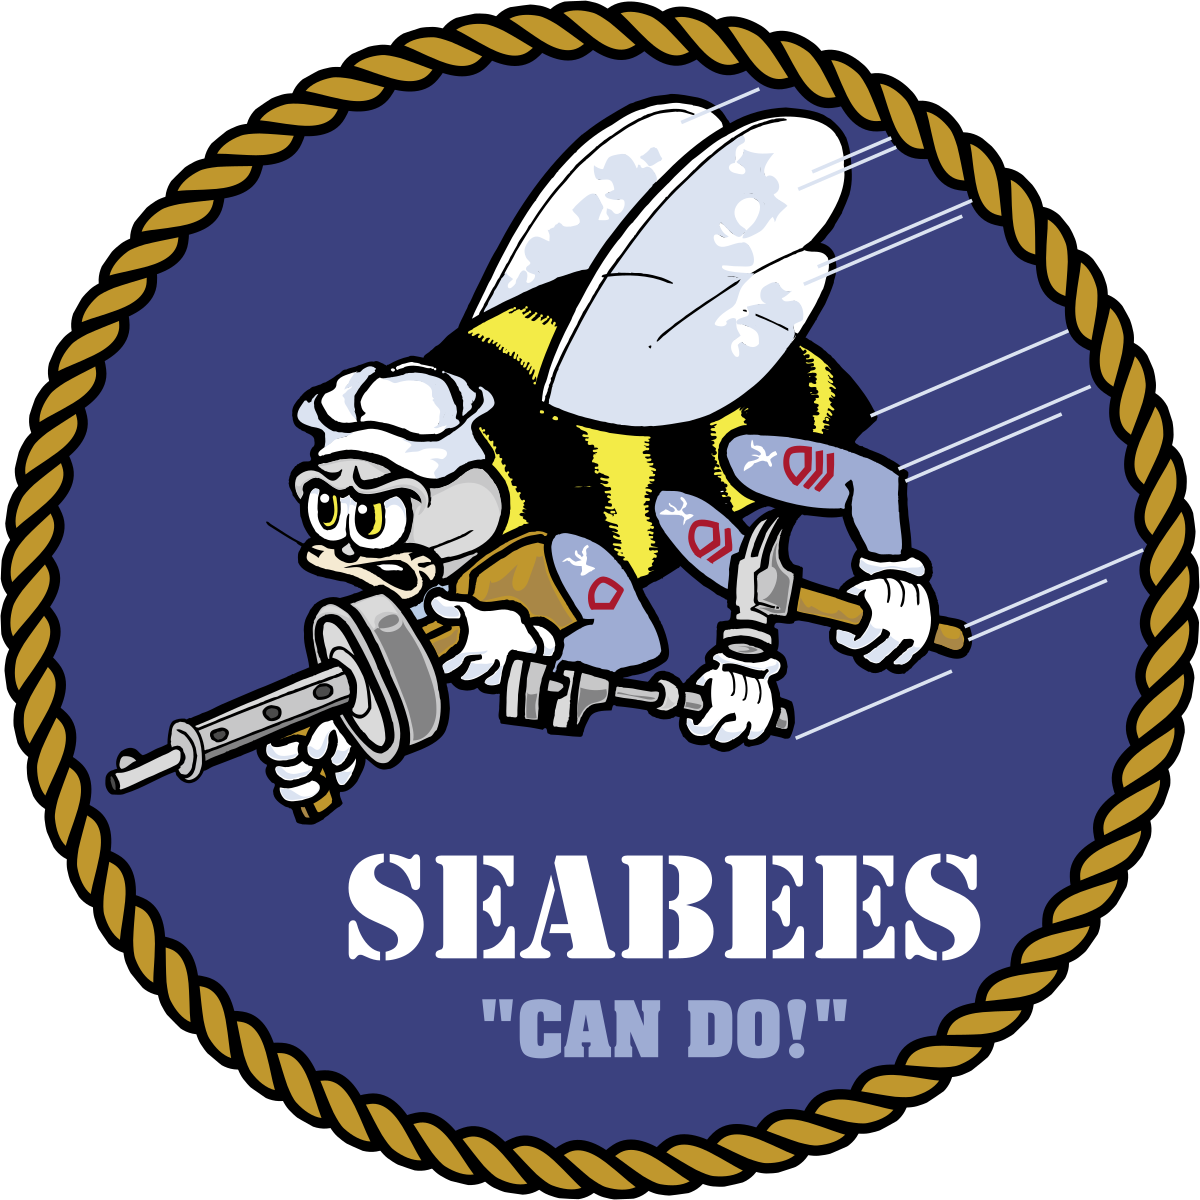 Seabee wikipedia . Congress clipart civic duty